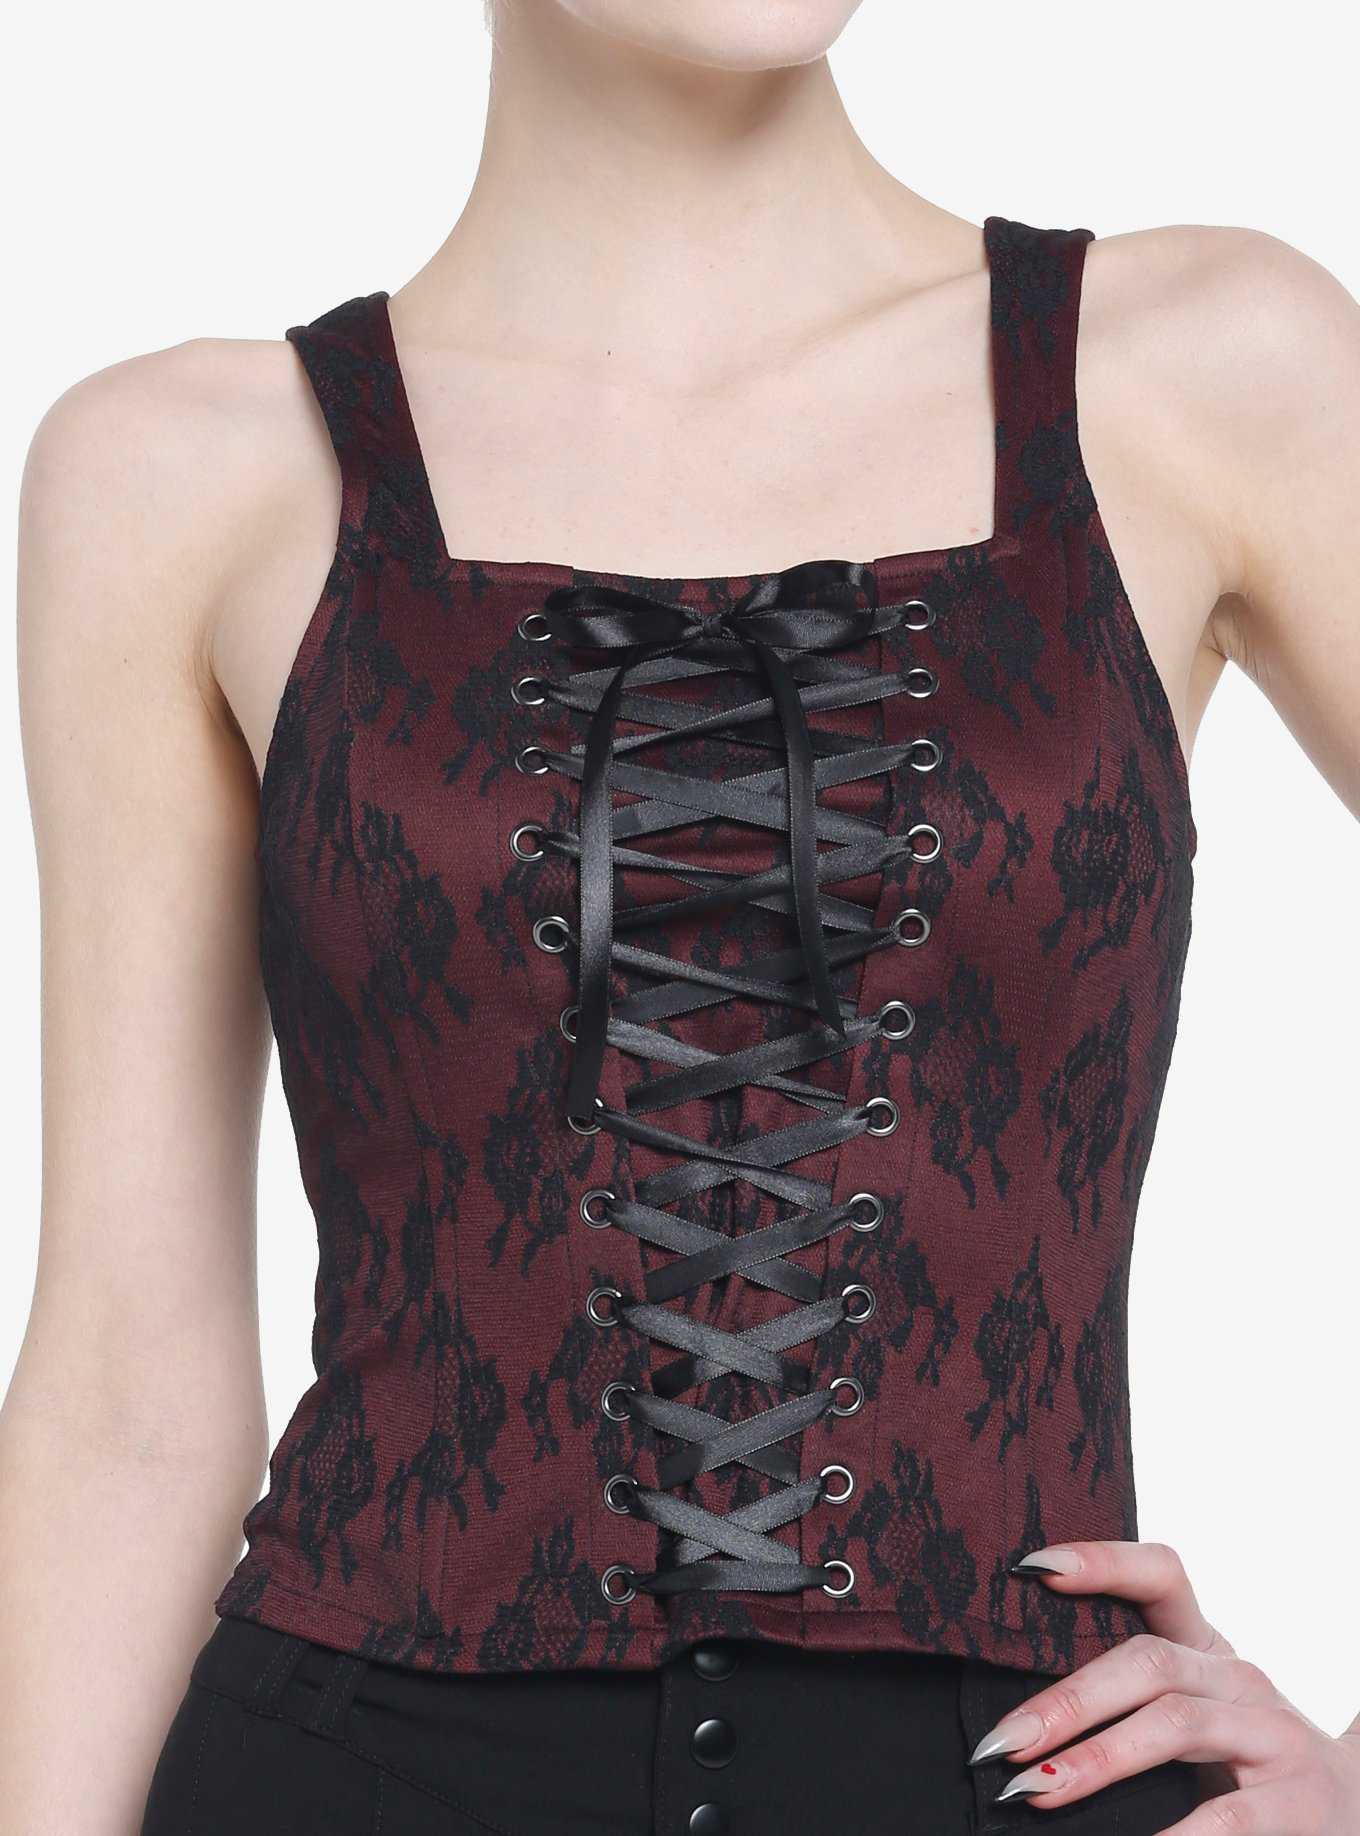 20 Body corset ideas  corset, body corset, lace tights